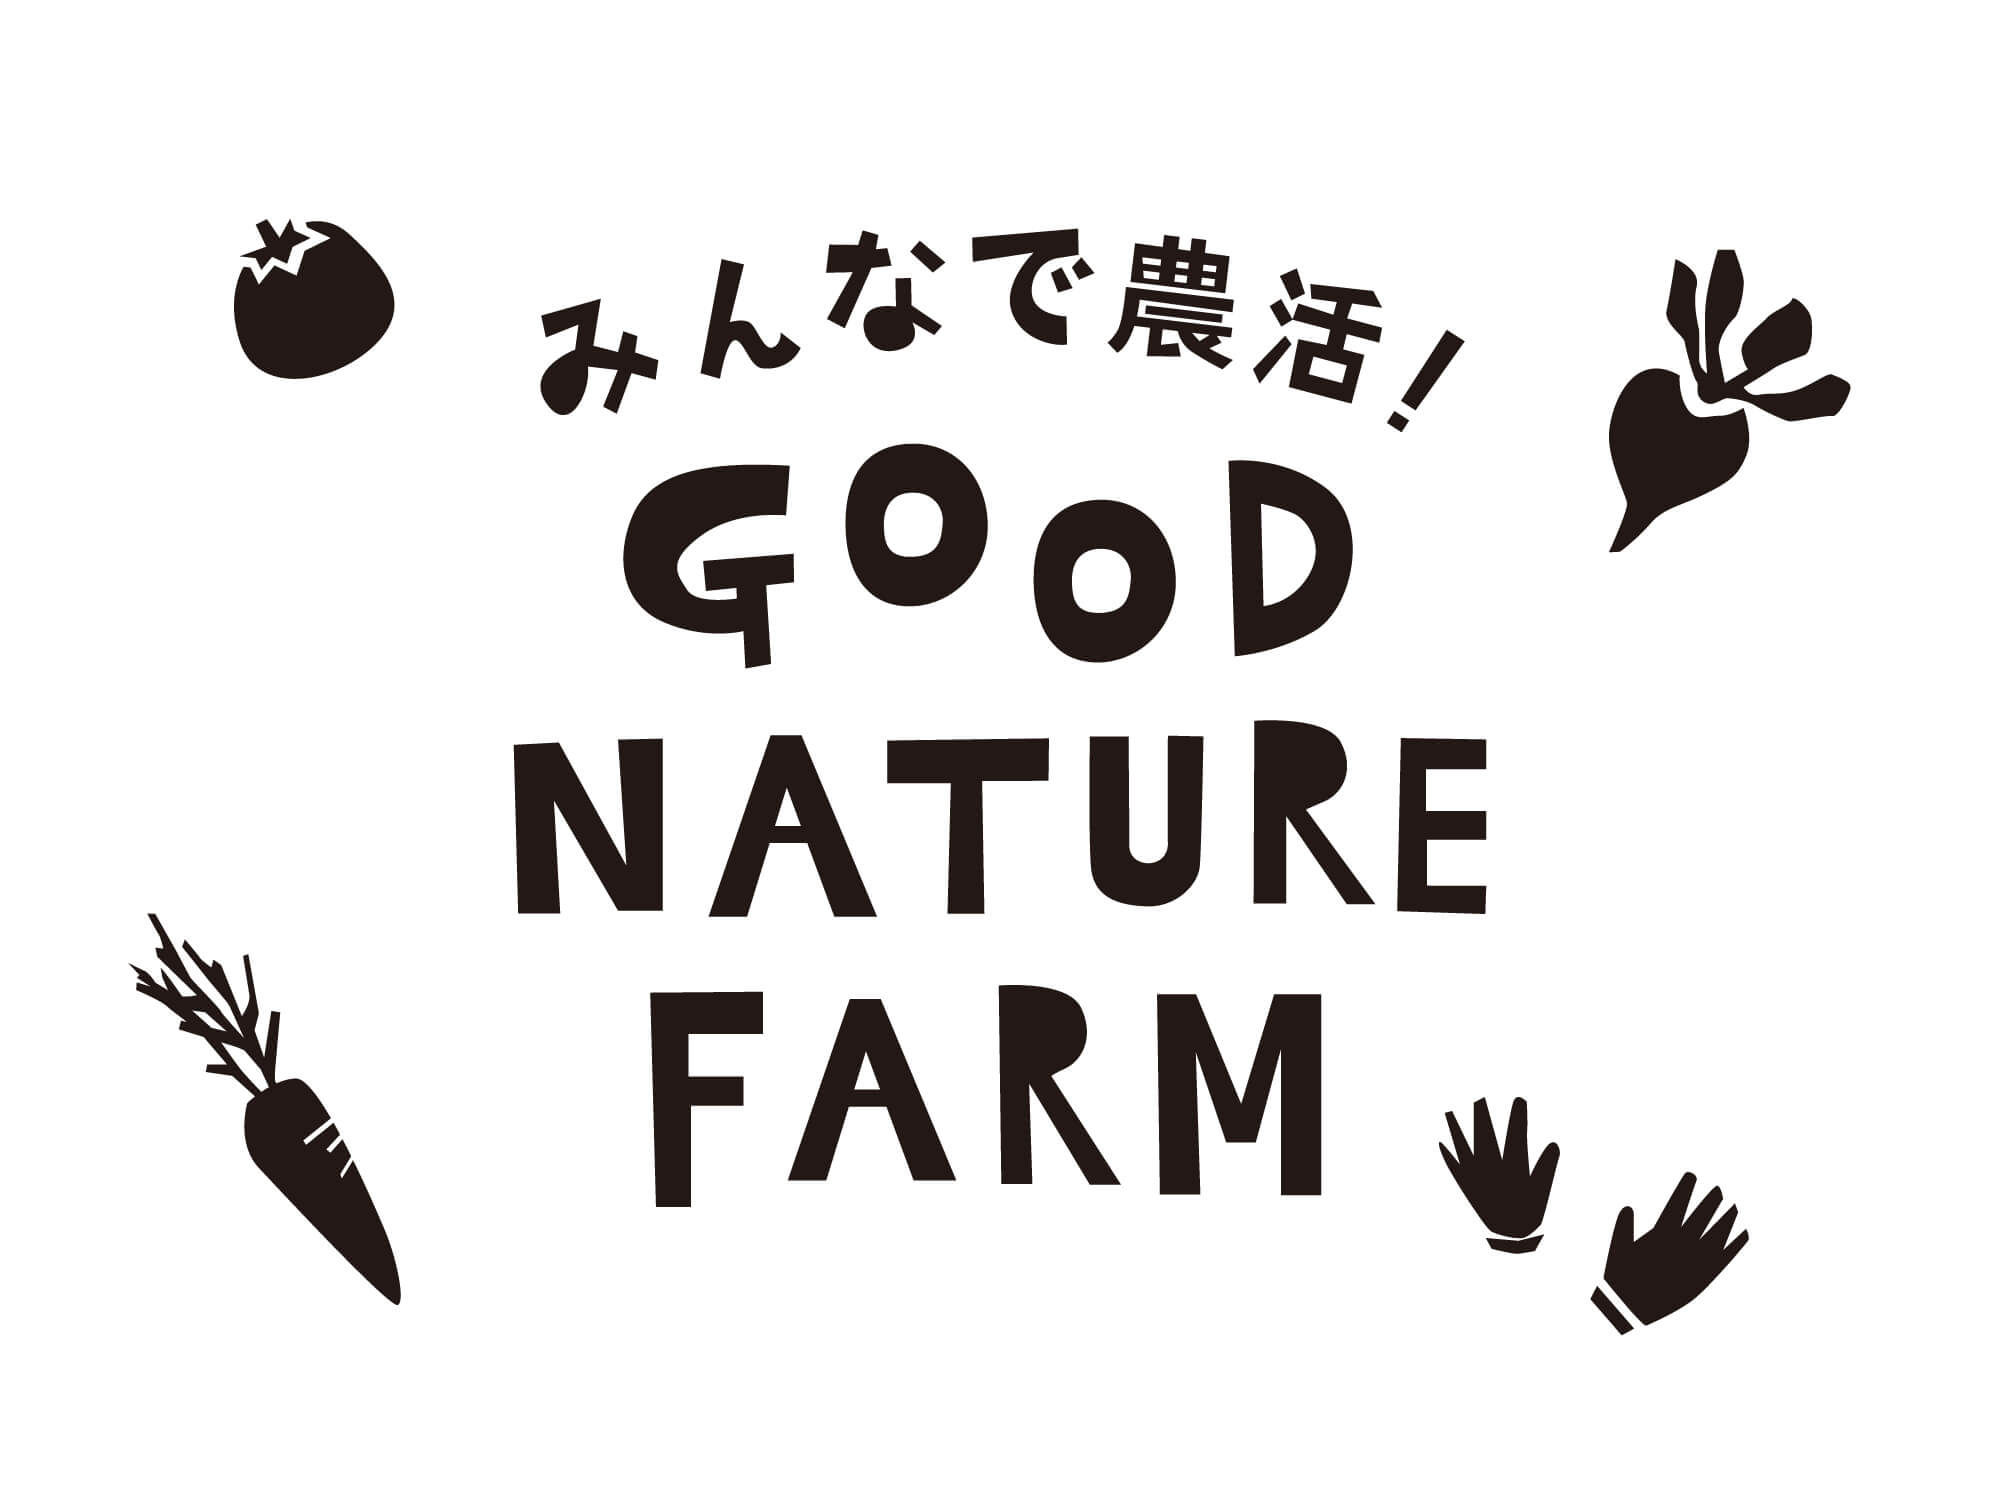 Farming with everyone! GOOD NATURE FARM